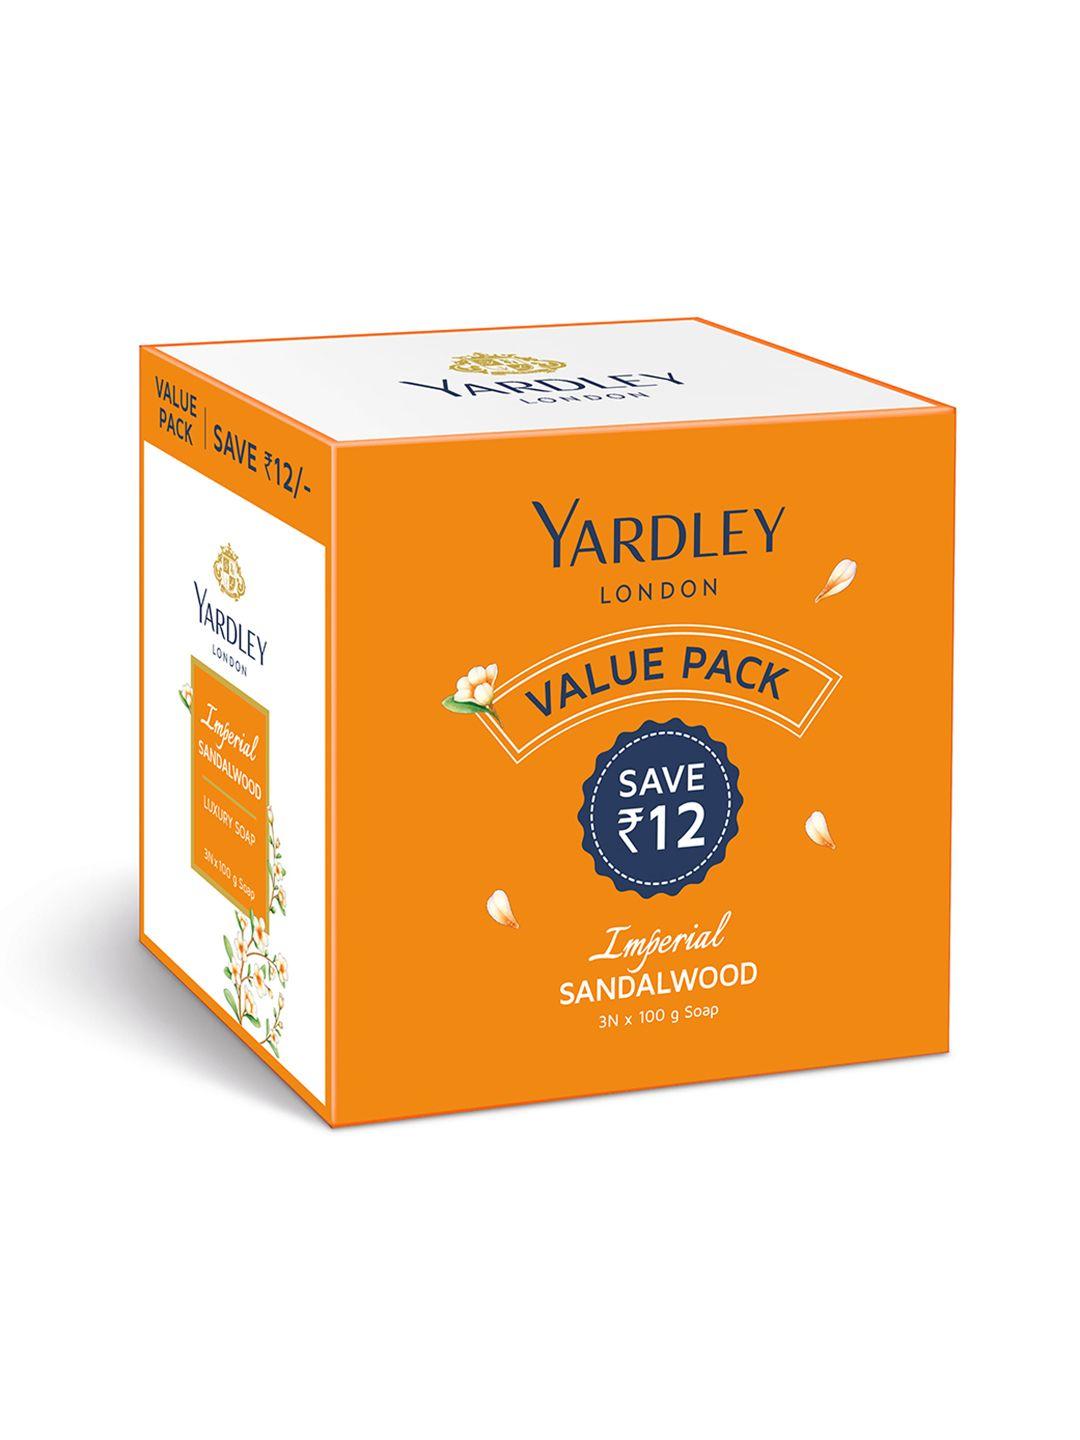 yardley london set of 3 imperial sandalwood luxury soaps - 100g each